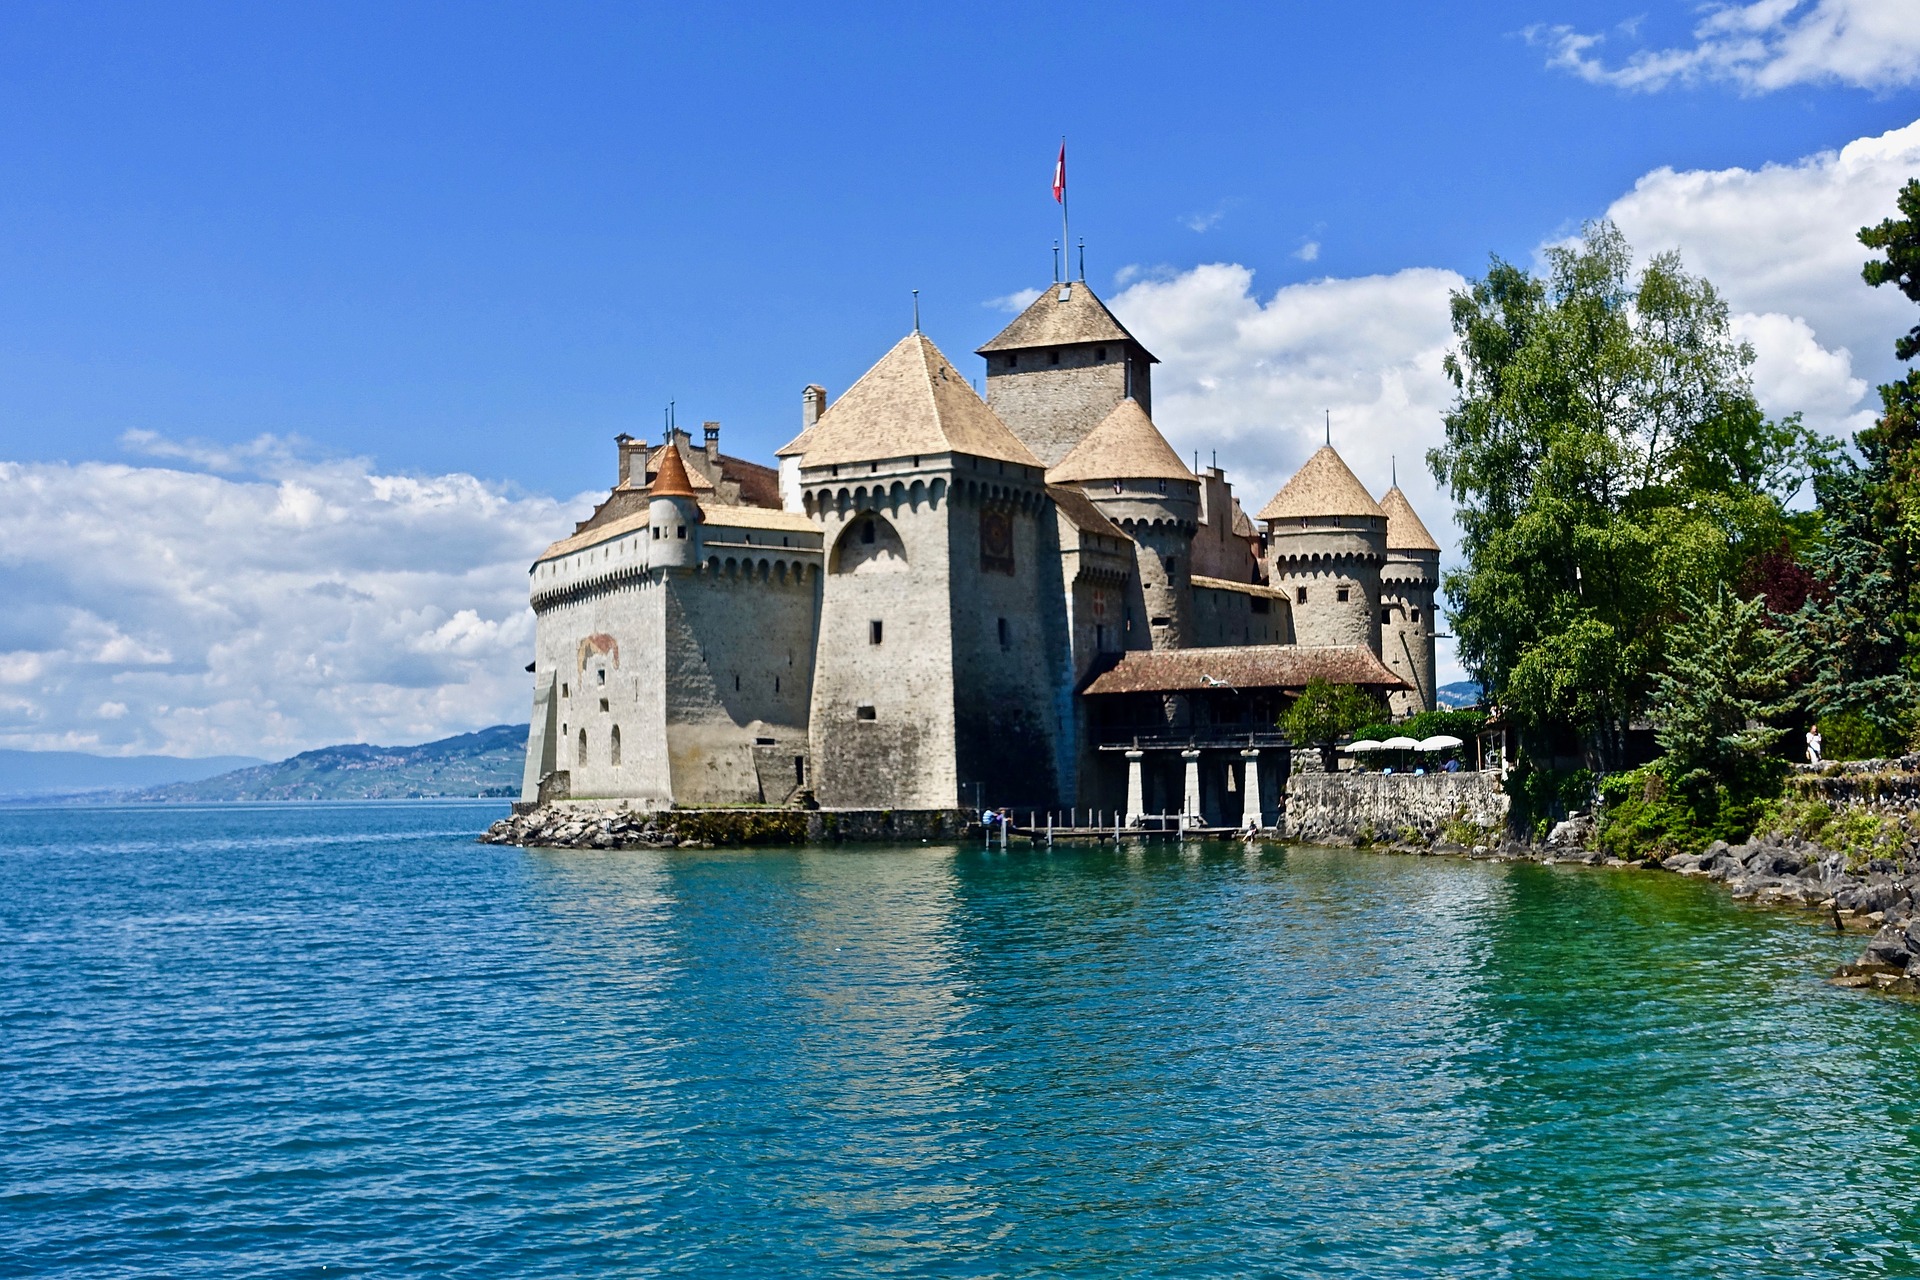 Glorious Switzerland - Chillon Castle, Lake Geneva, Switzerland